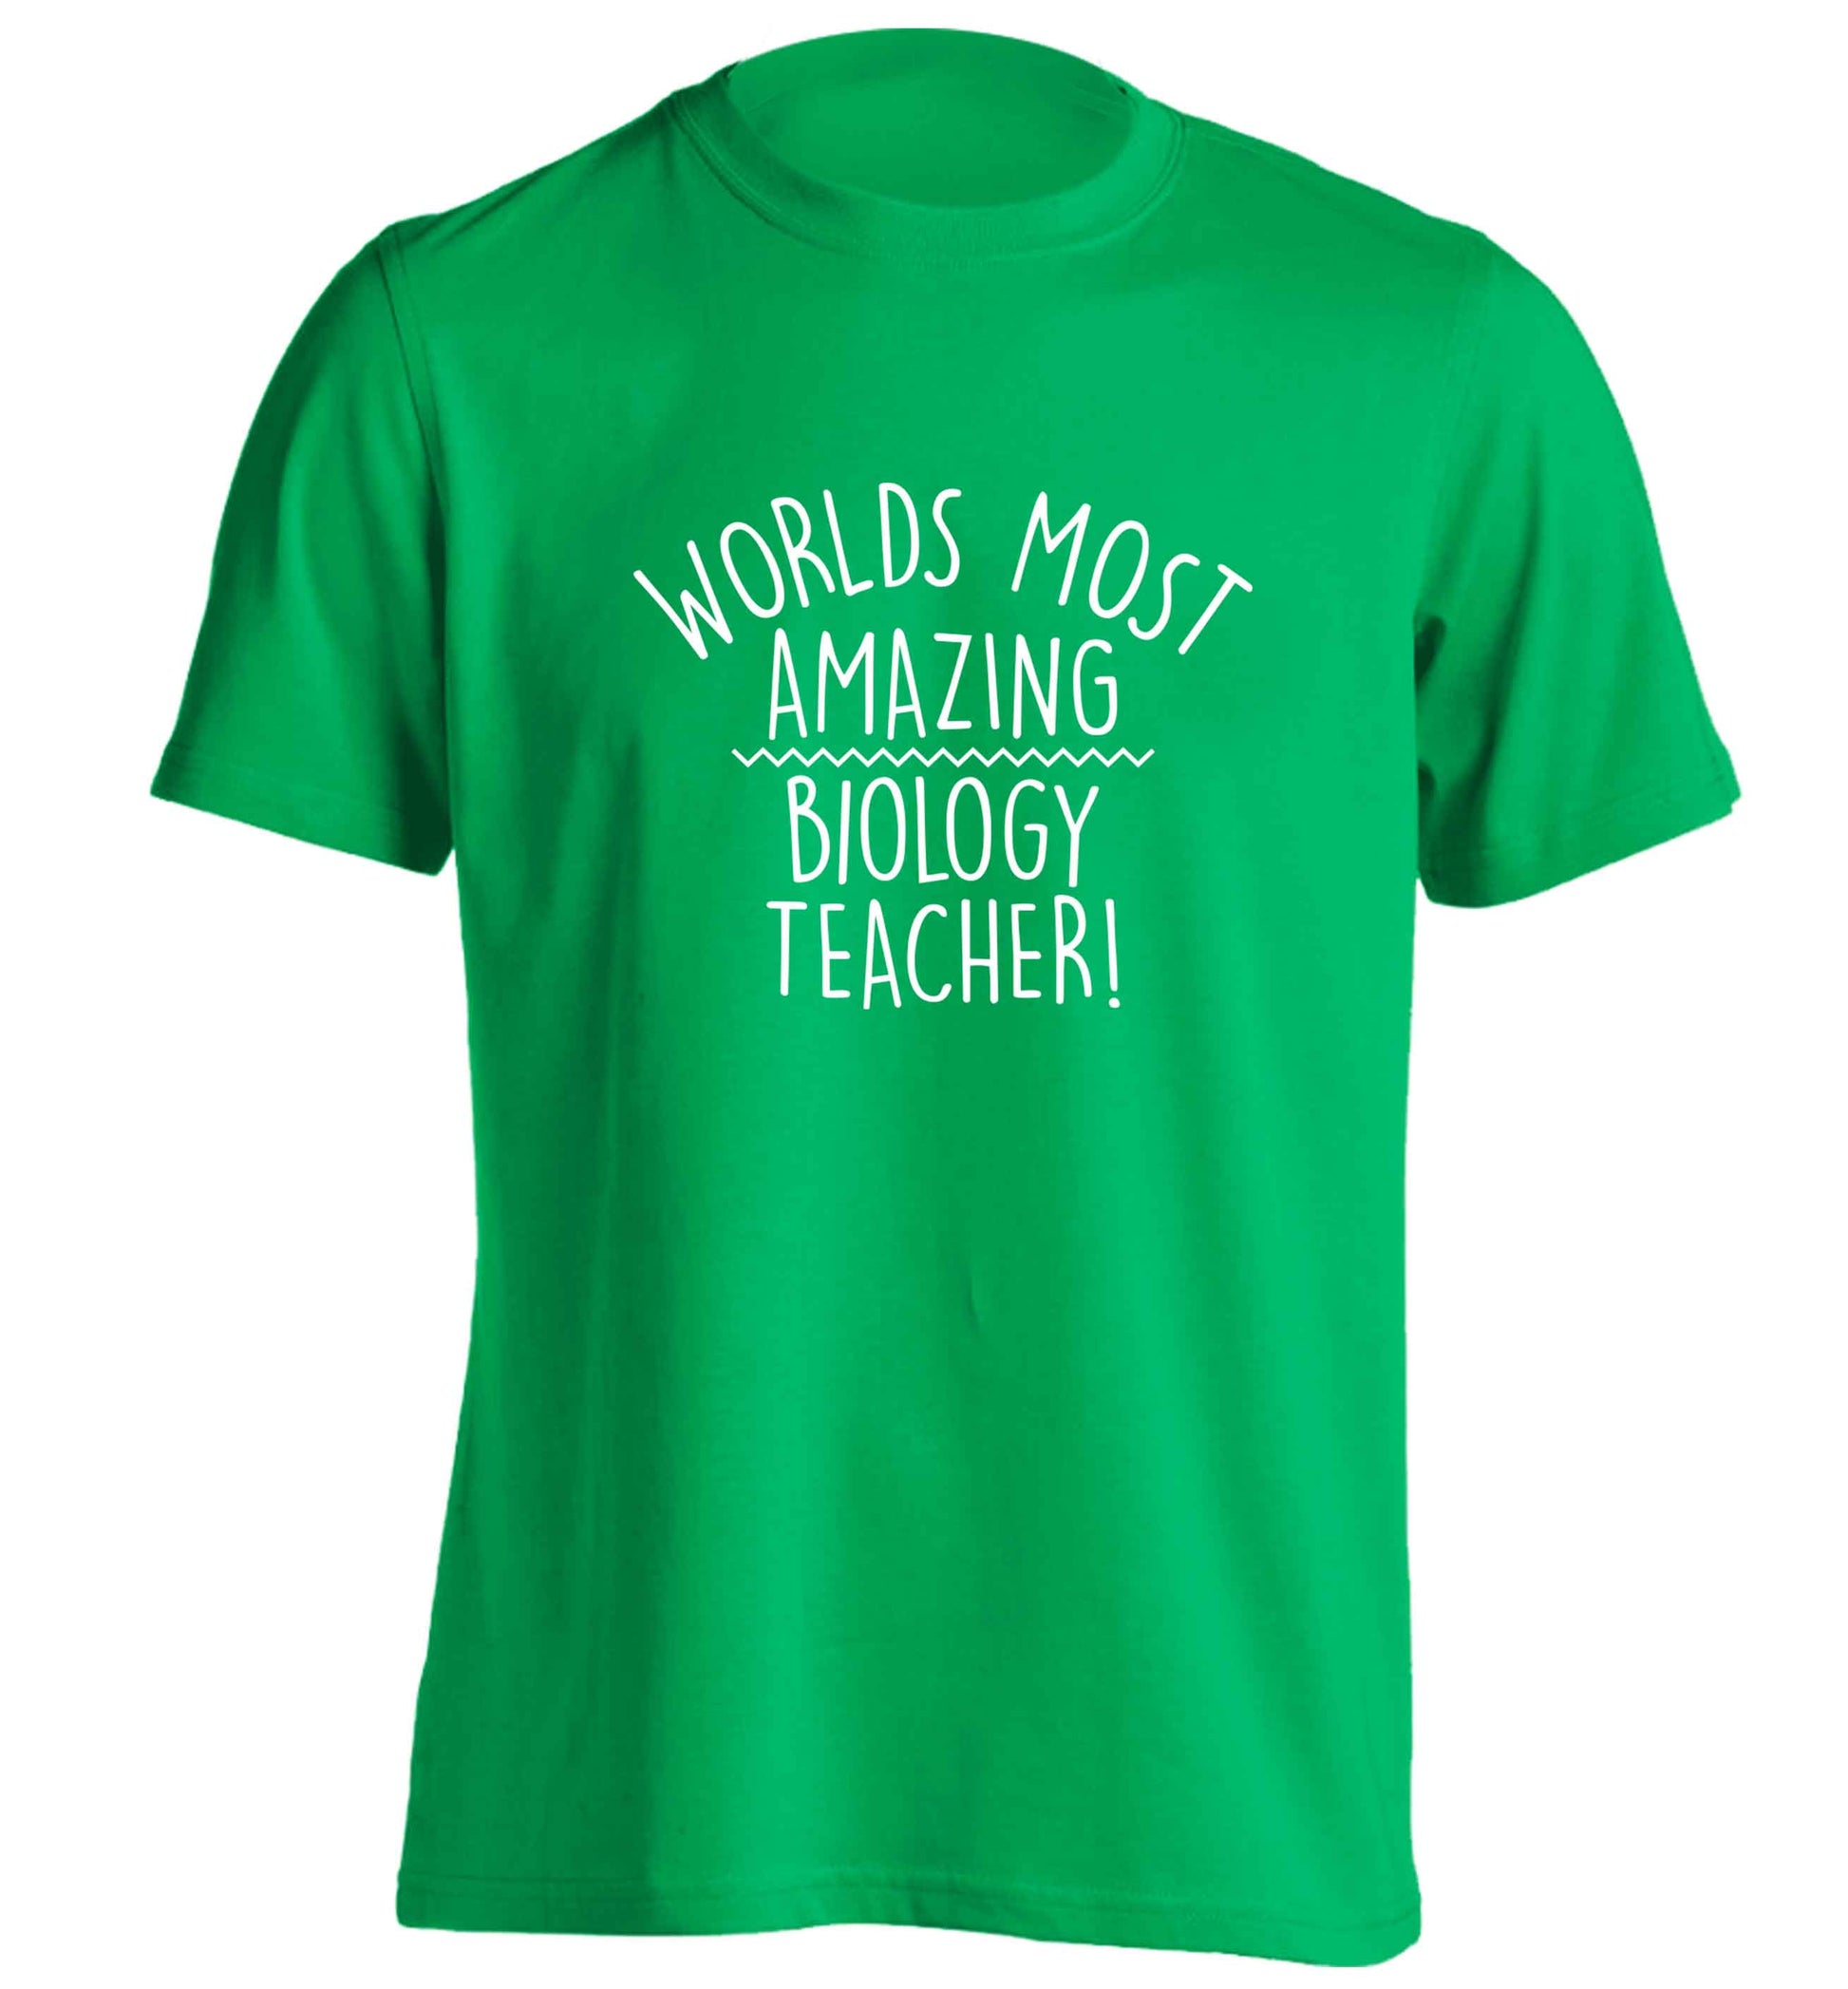 Worlds most amazing biology teacher adults unisex green Tshirt 2XL